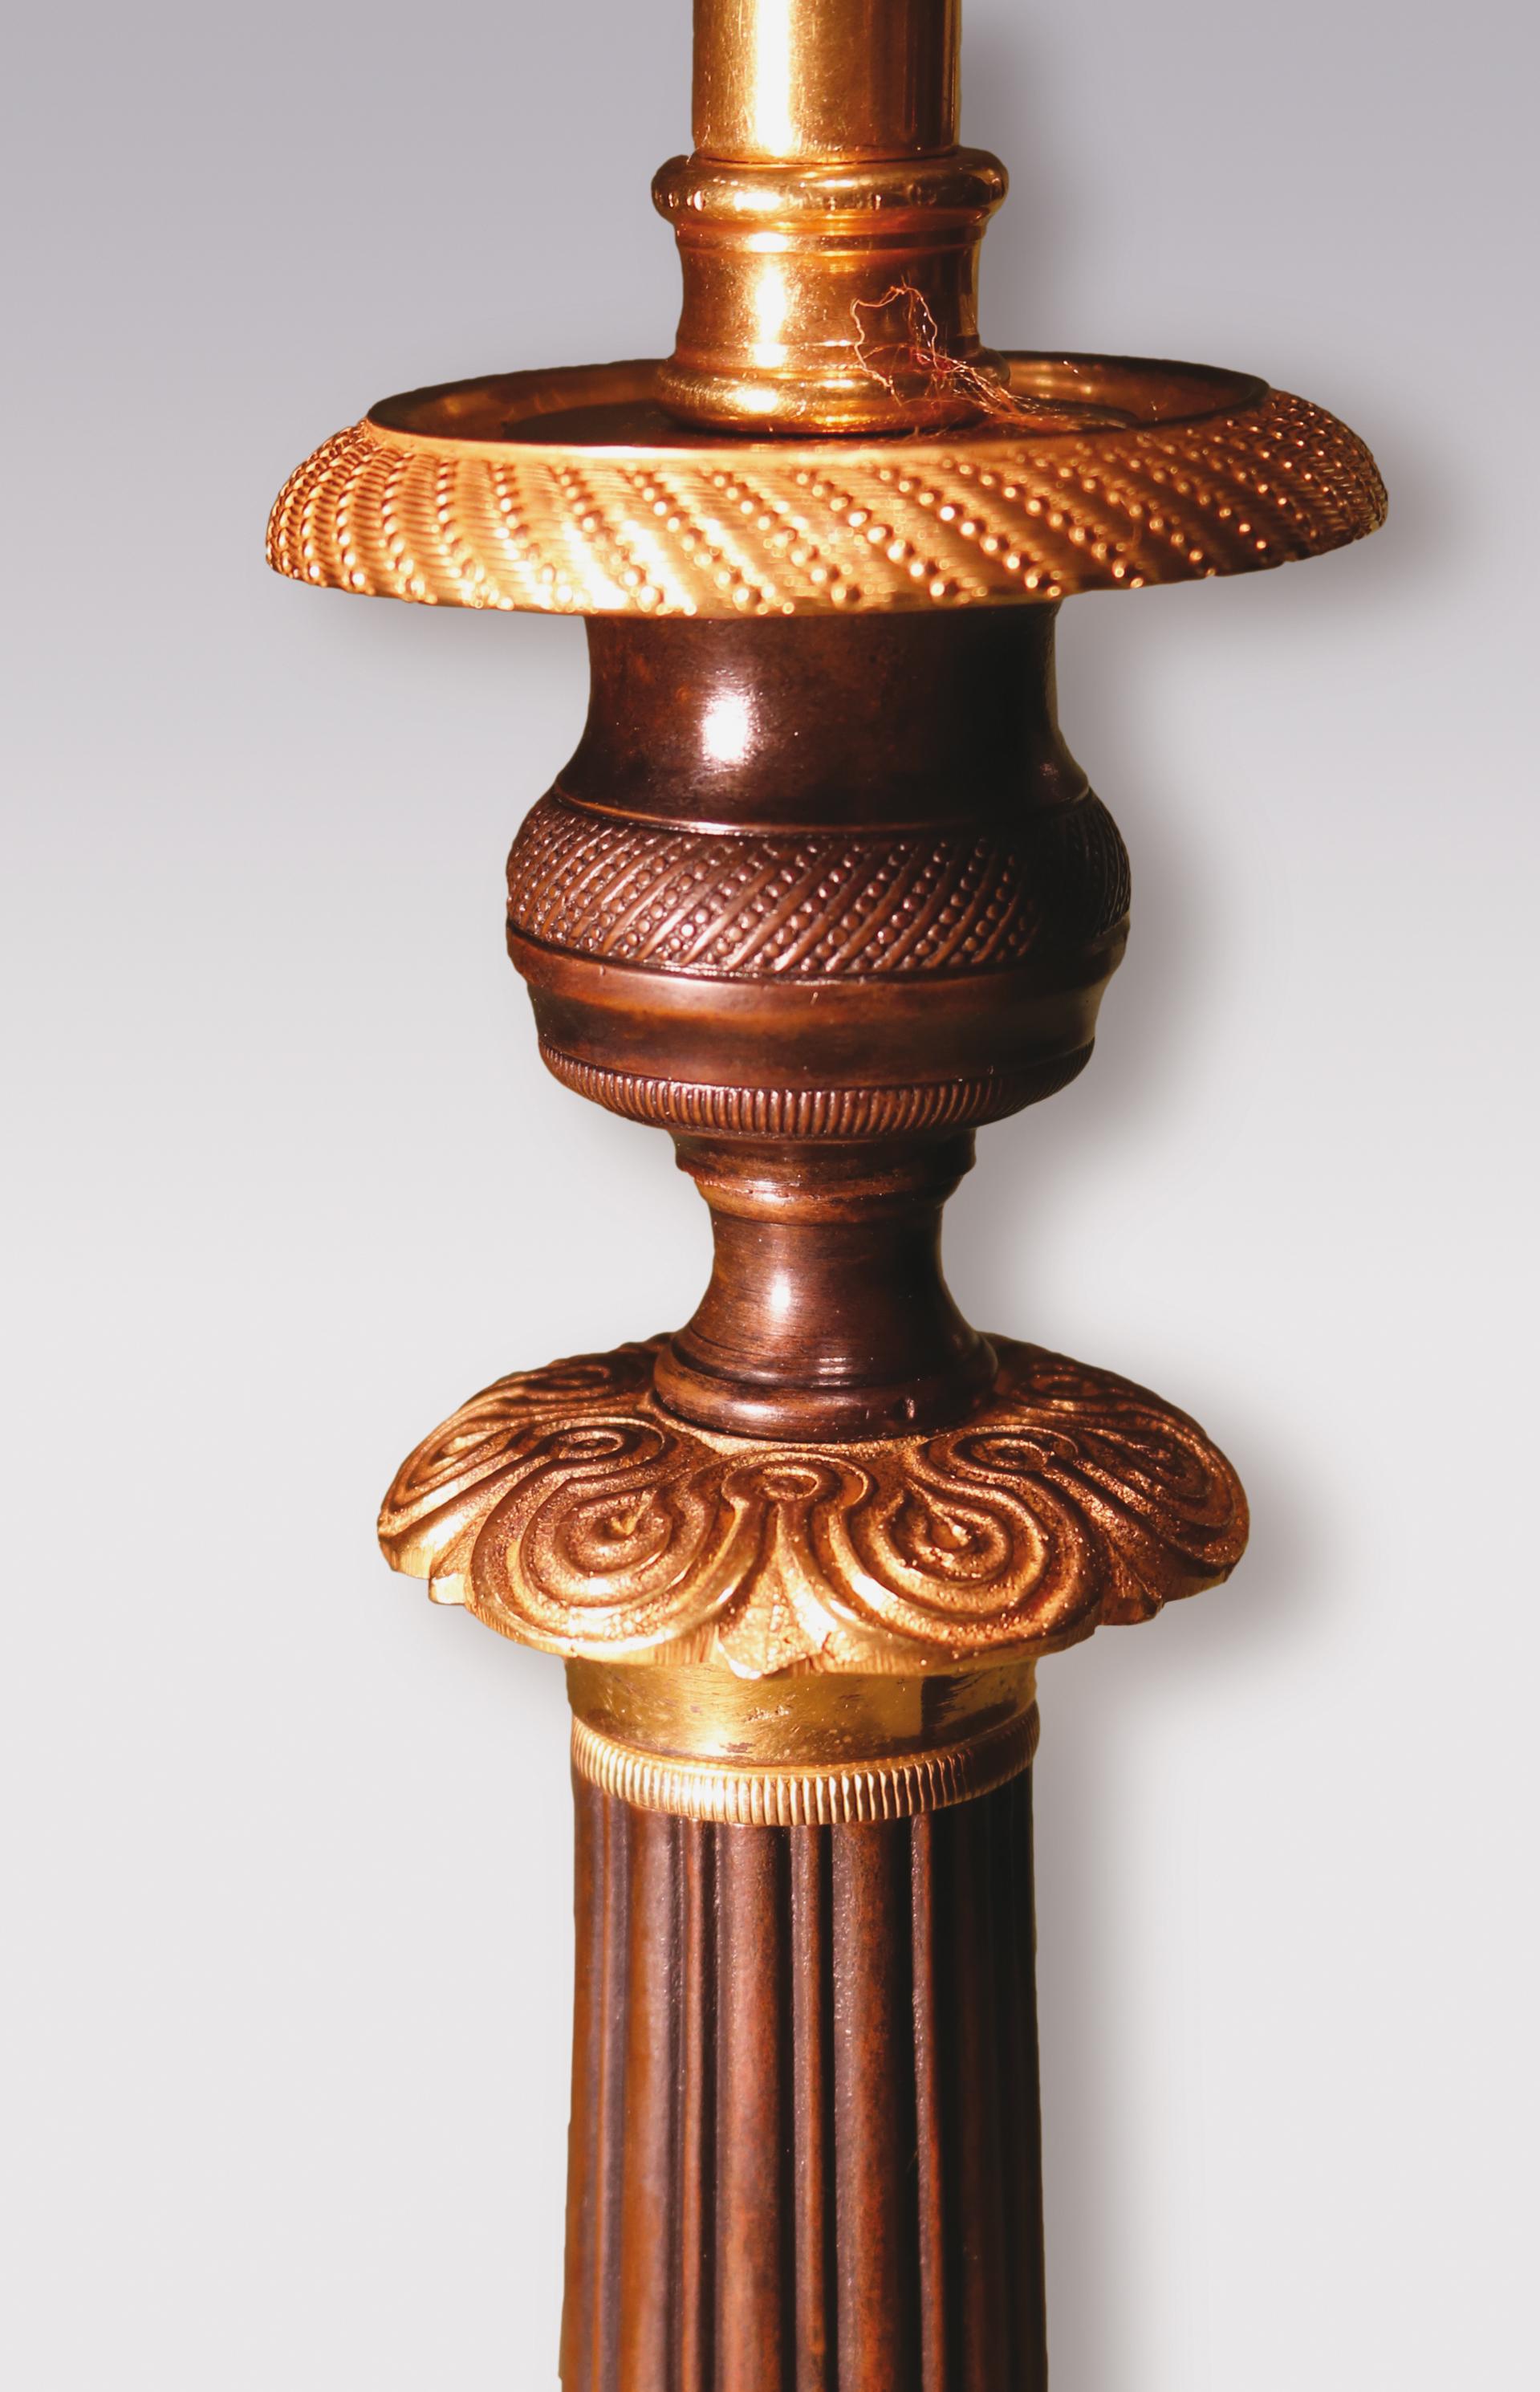 English 19th Century Bronze and Ormolu Candlesticks with Circular Bases